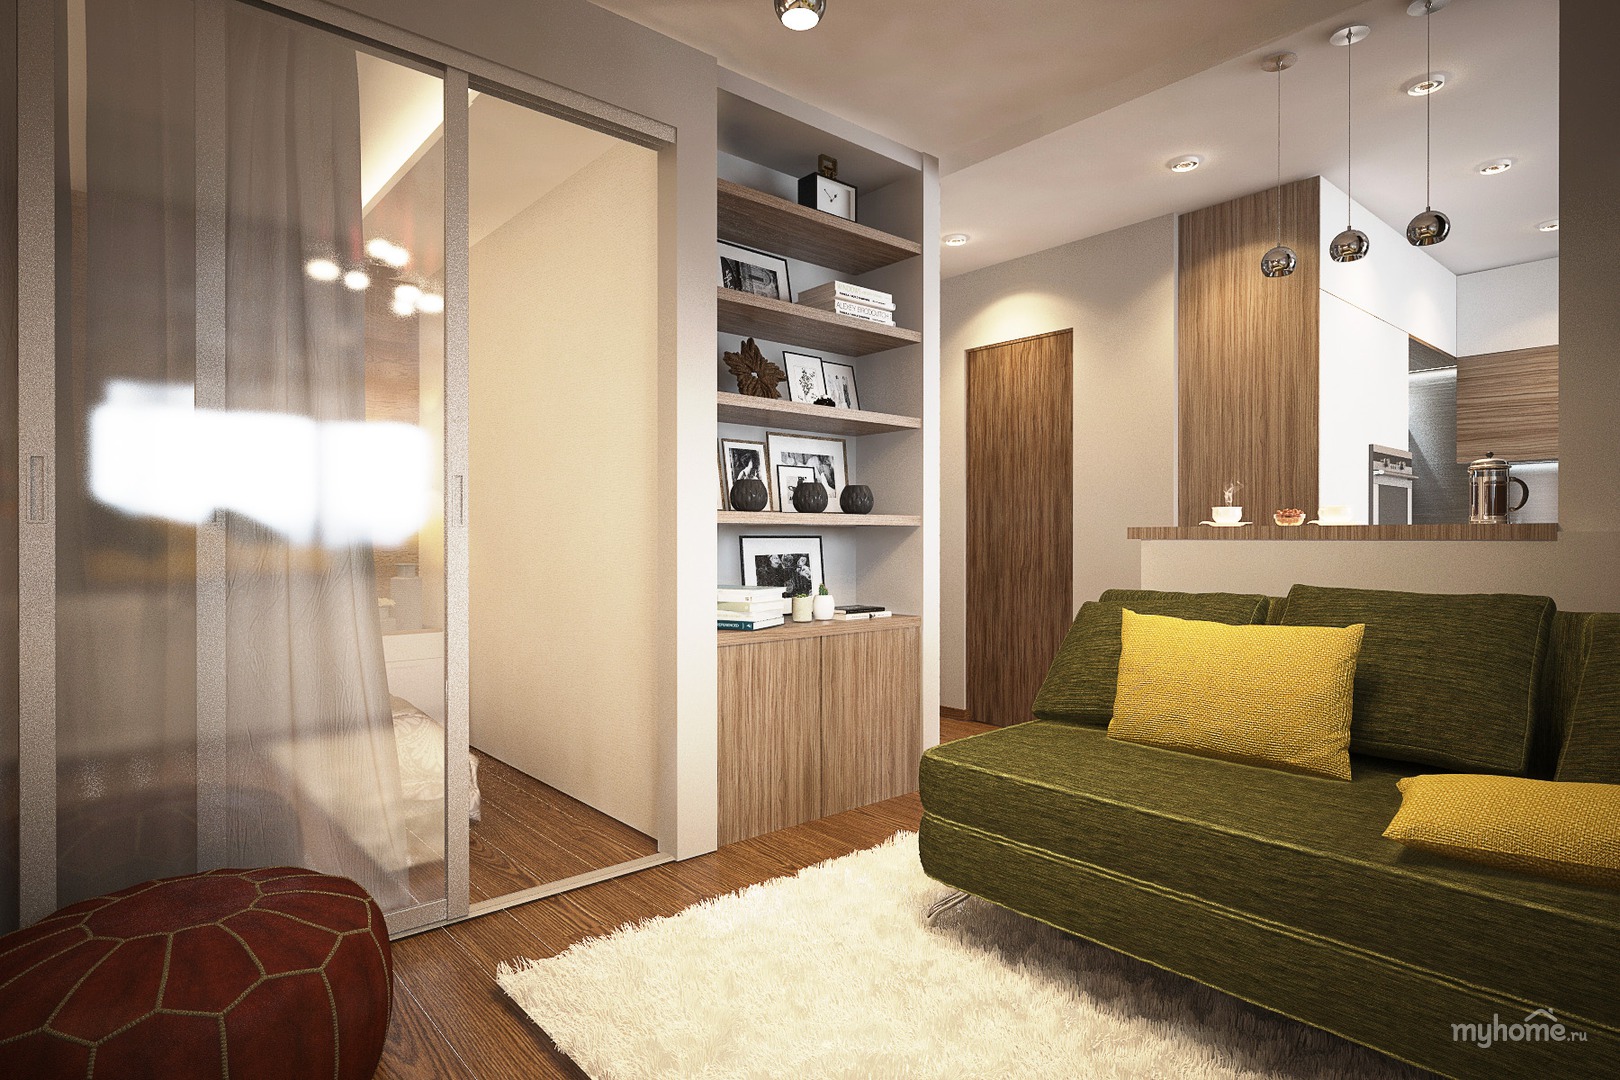 Дизайн 1 комнатной квартиры 40 кв м фото интерьера